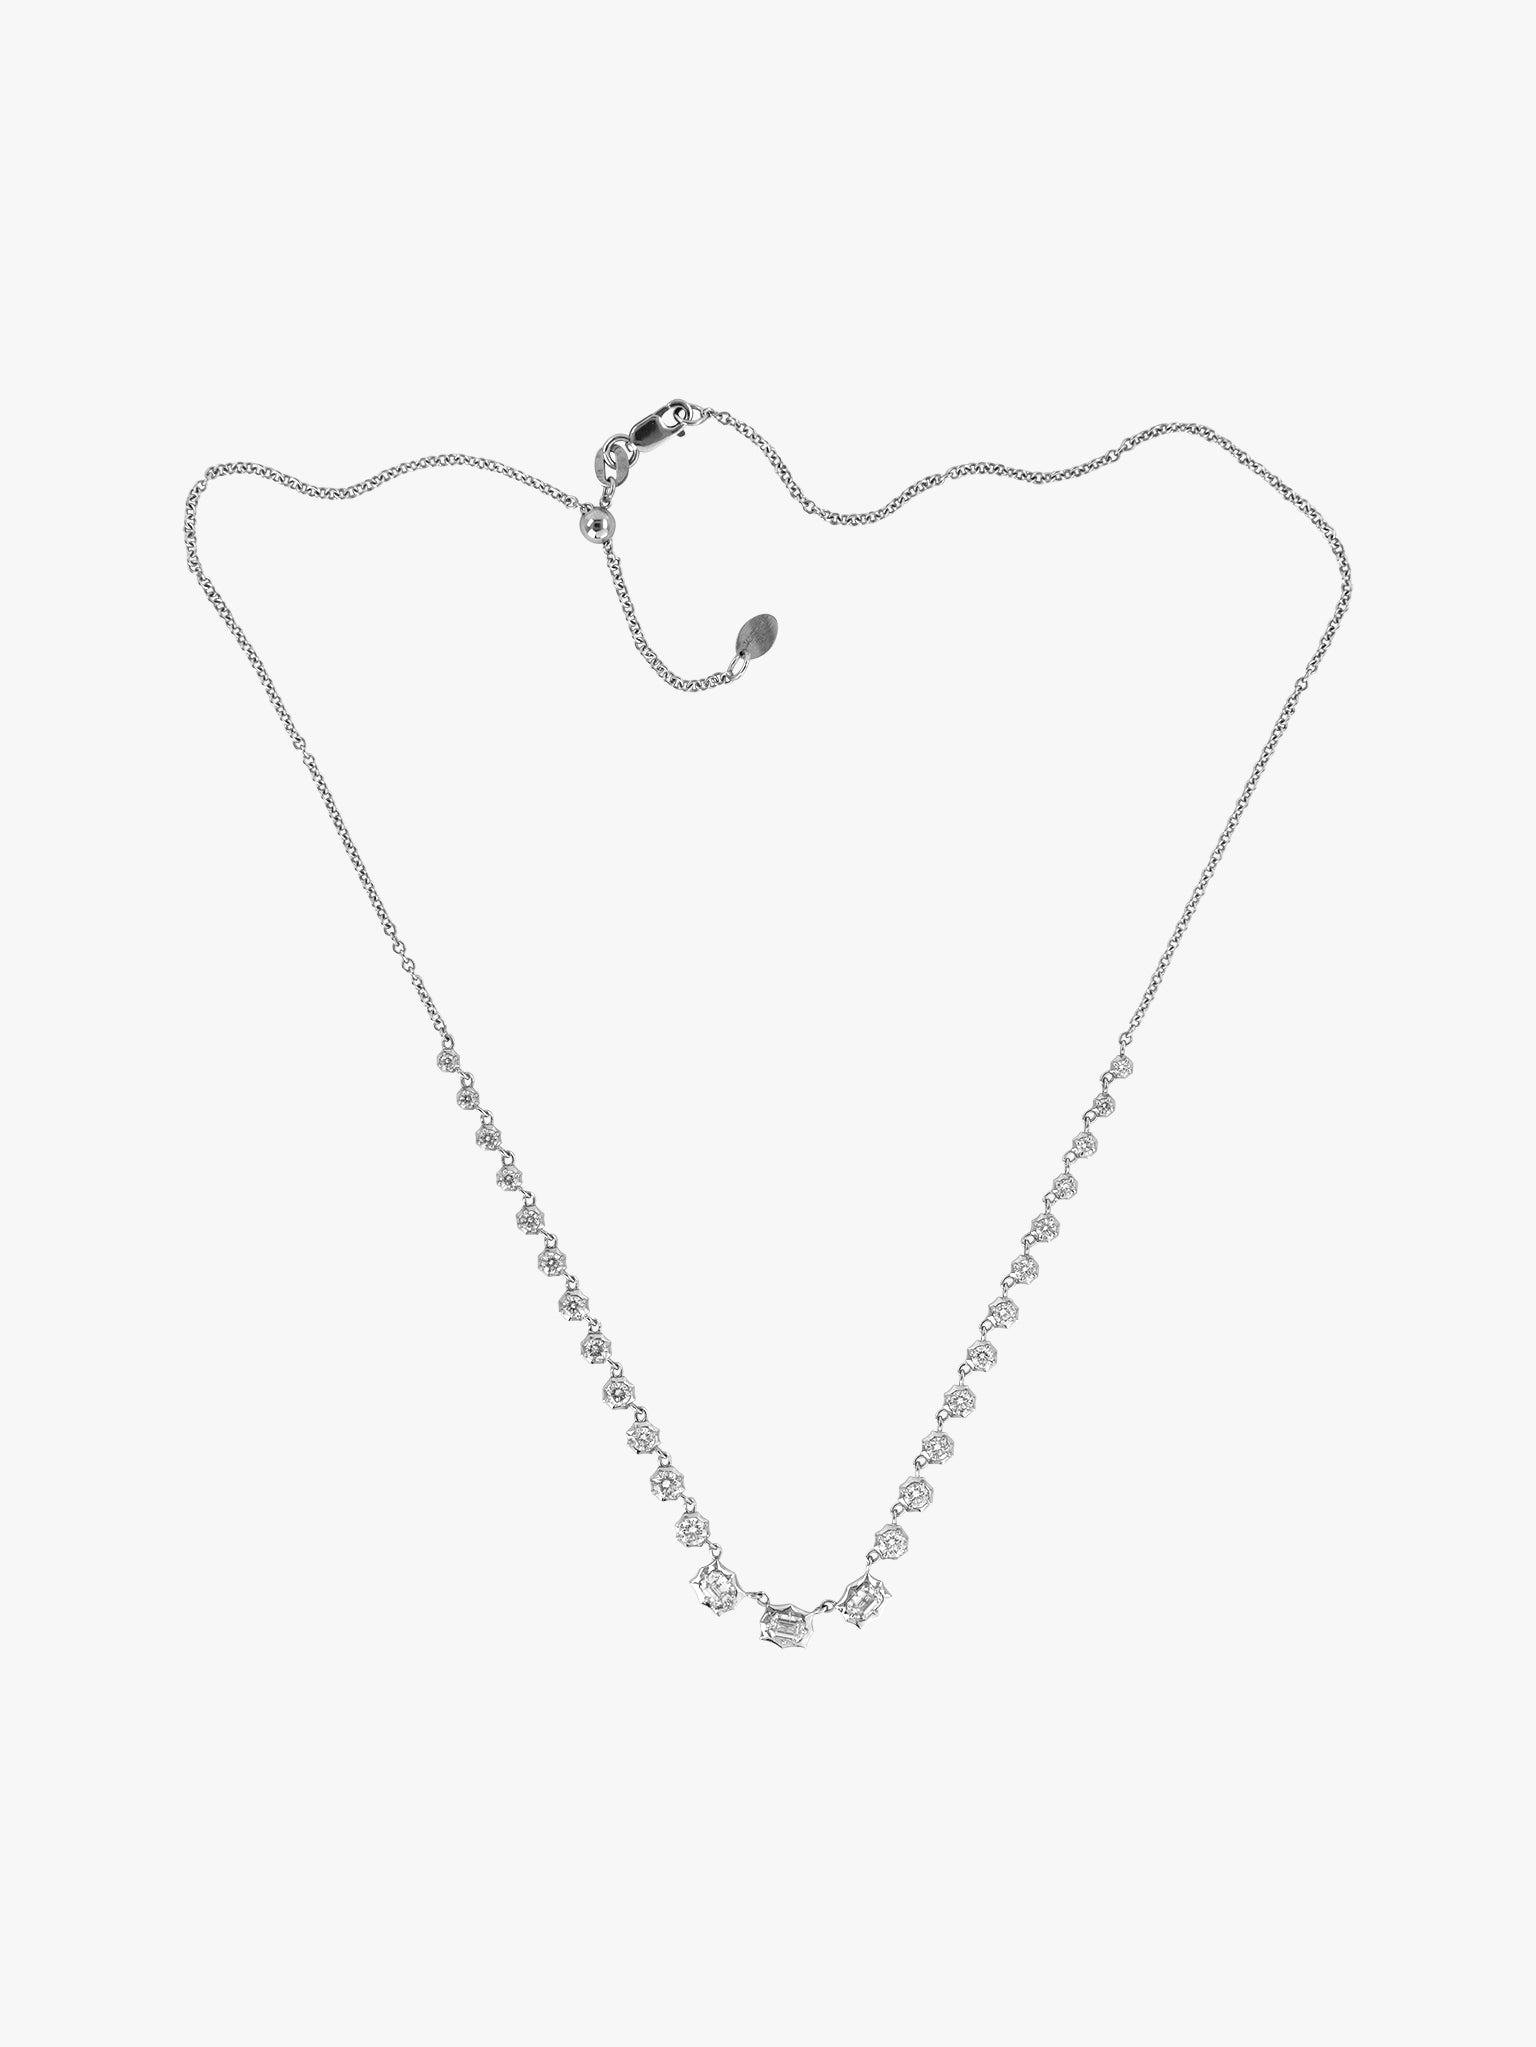 Vanguard riviera necklace